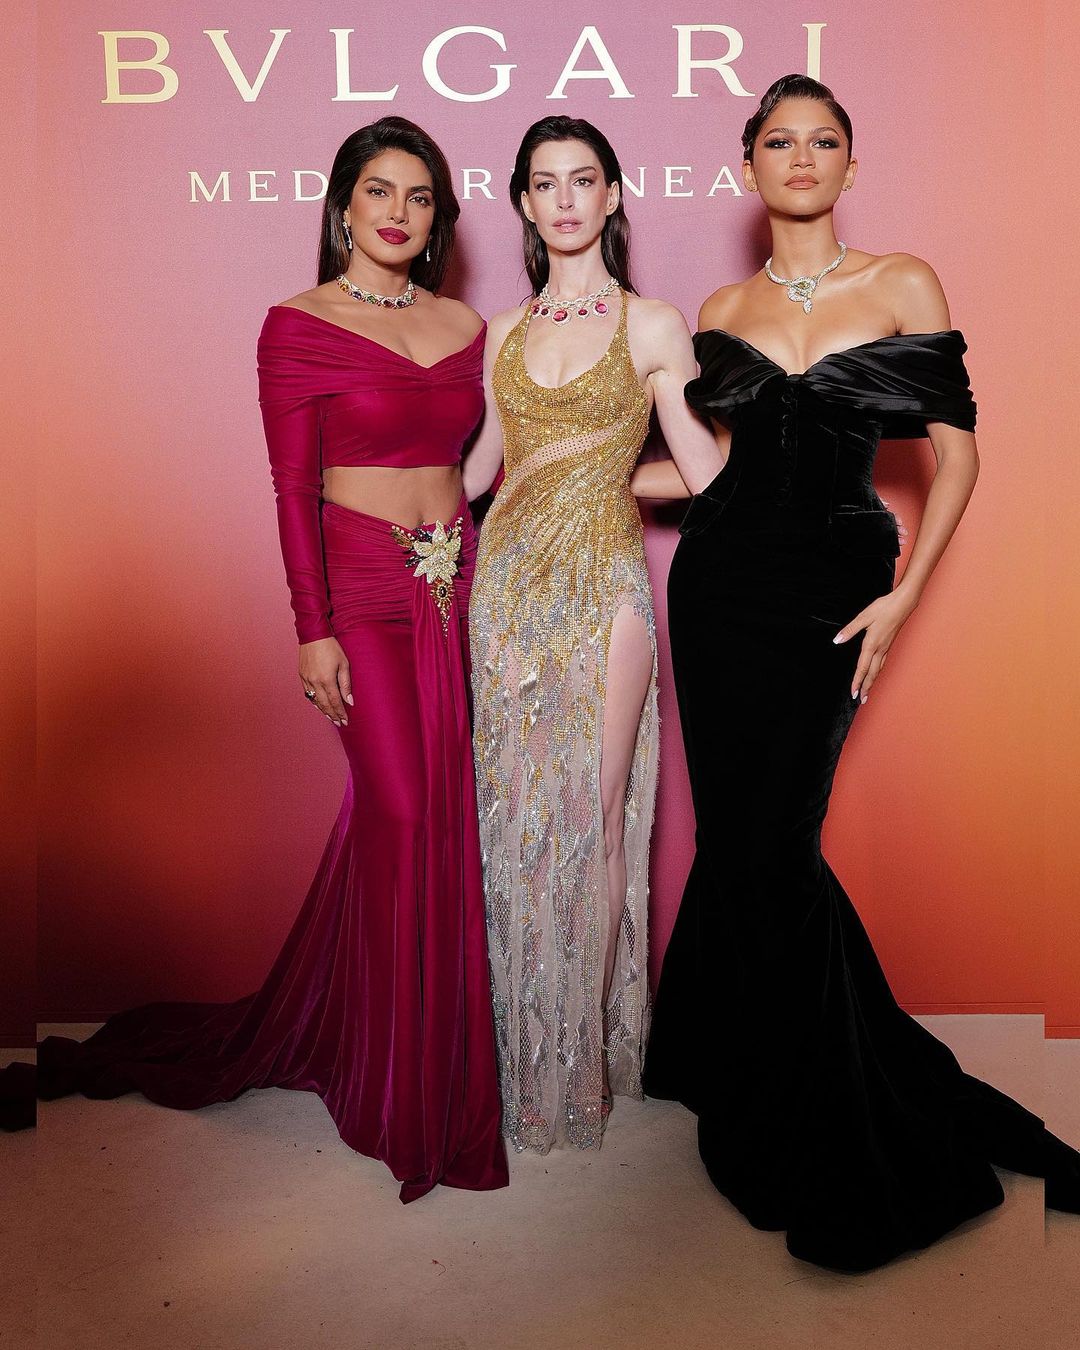 Did Anne Hathaway Ignore Priyanka Chopra At Venice Event? Watch Viral Video